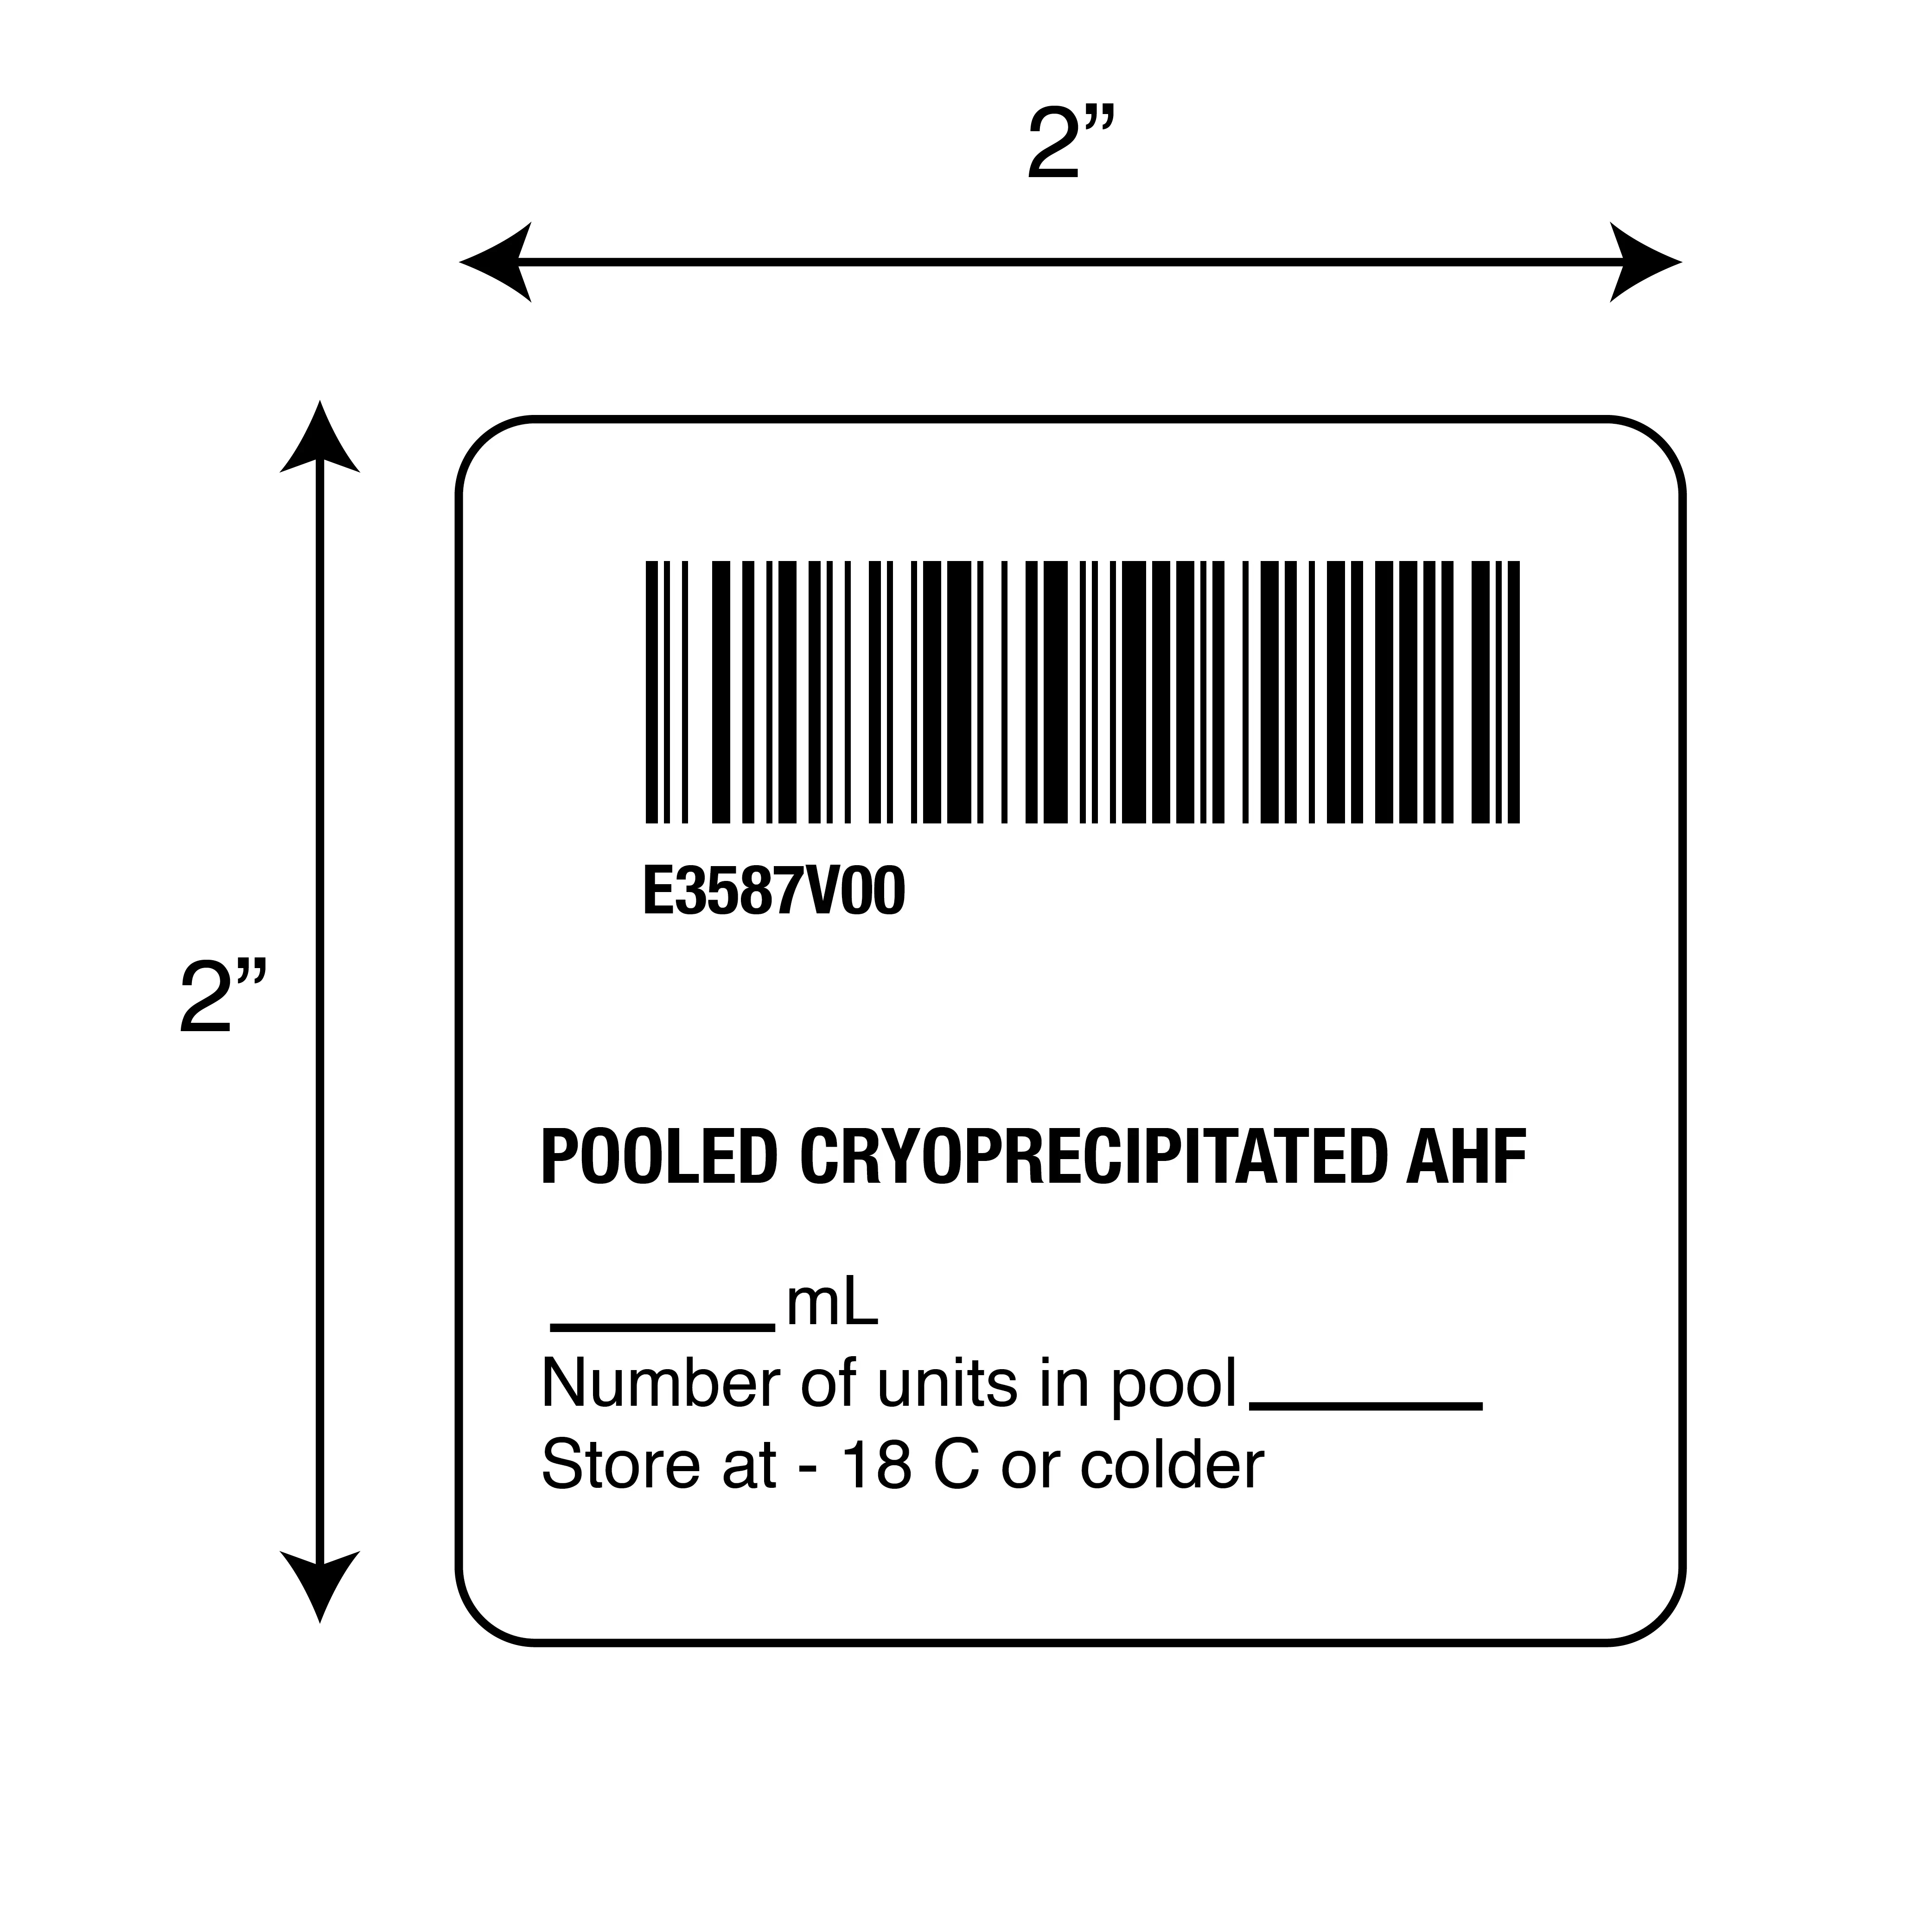 ISBT 128 Pooled Cryoprecipitated AHF